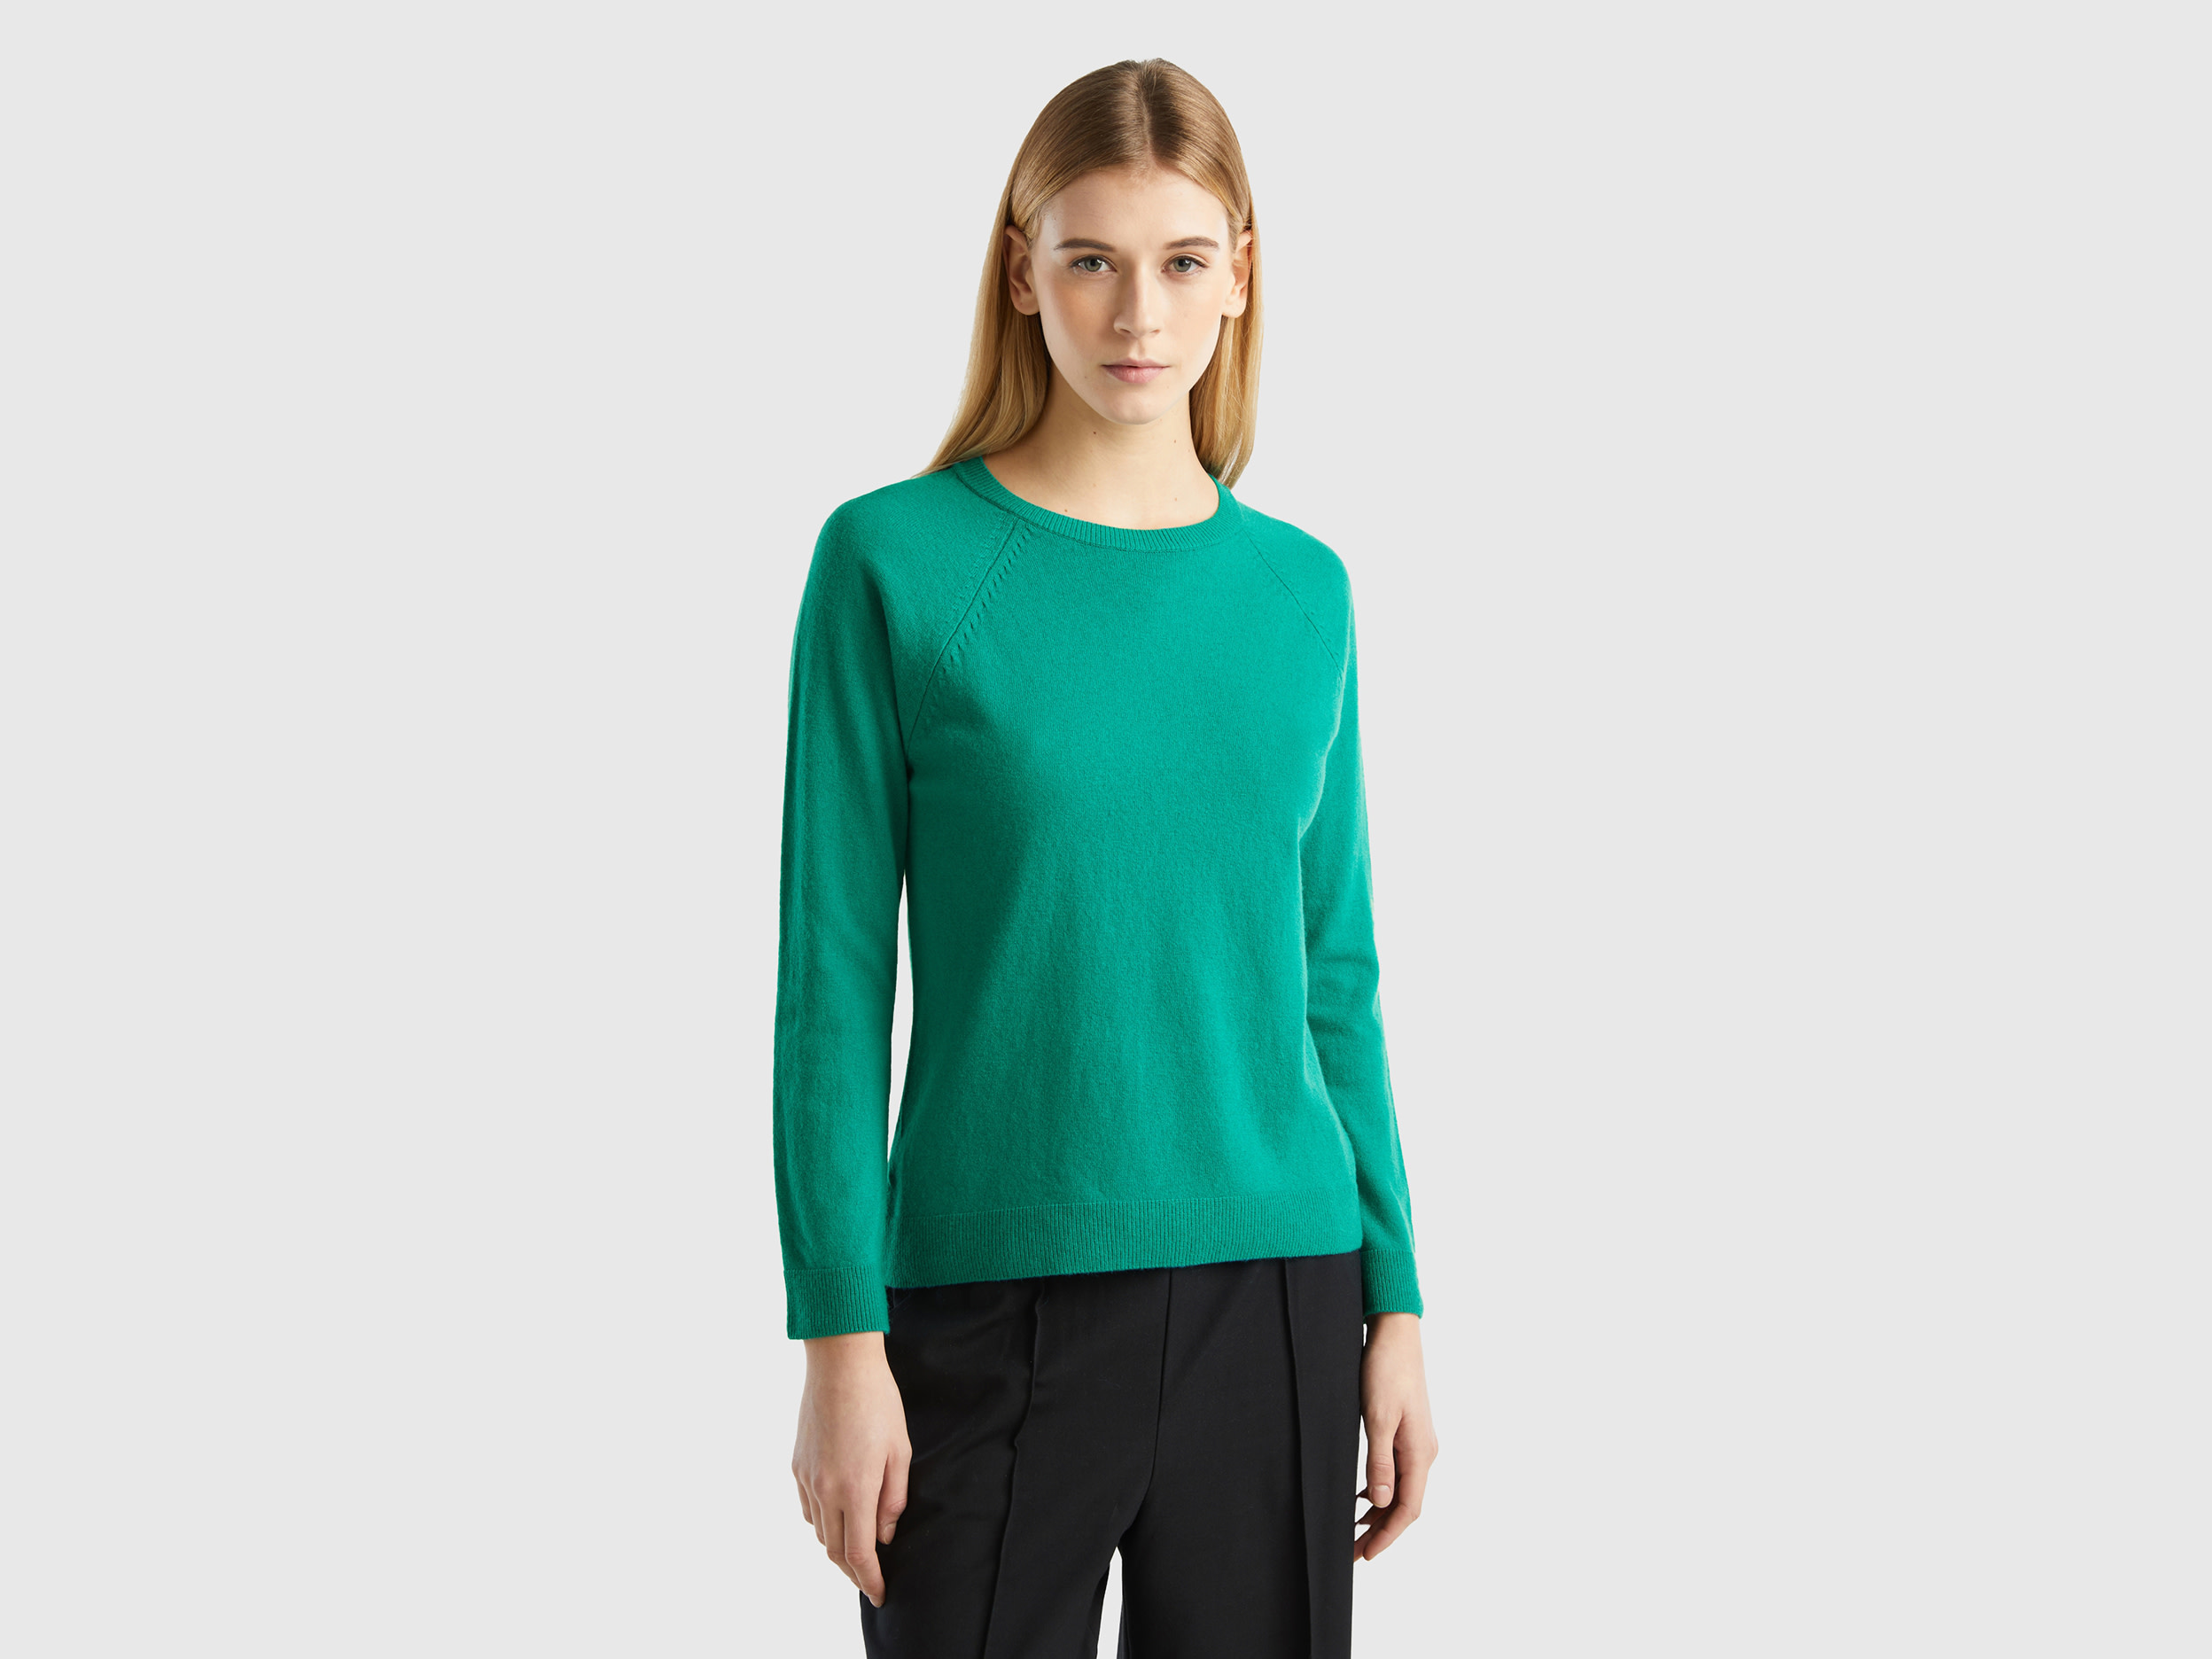 Benetton, Aqua Green Crew Neck Sweater In Wool And Cashmere Blend, size L, Aqua, Women